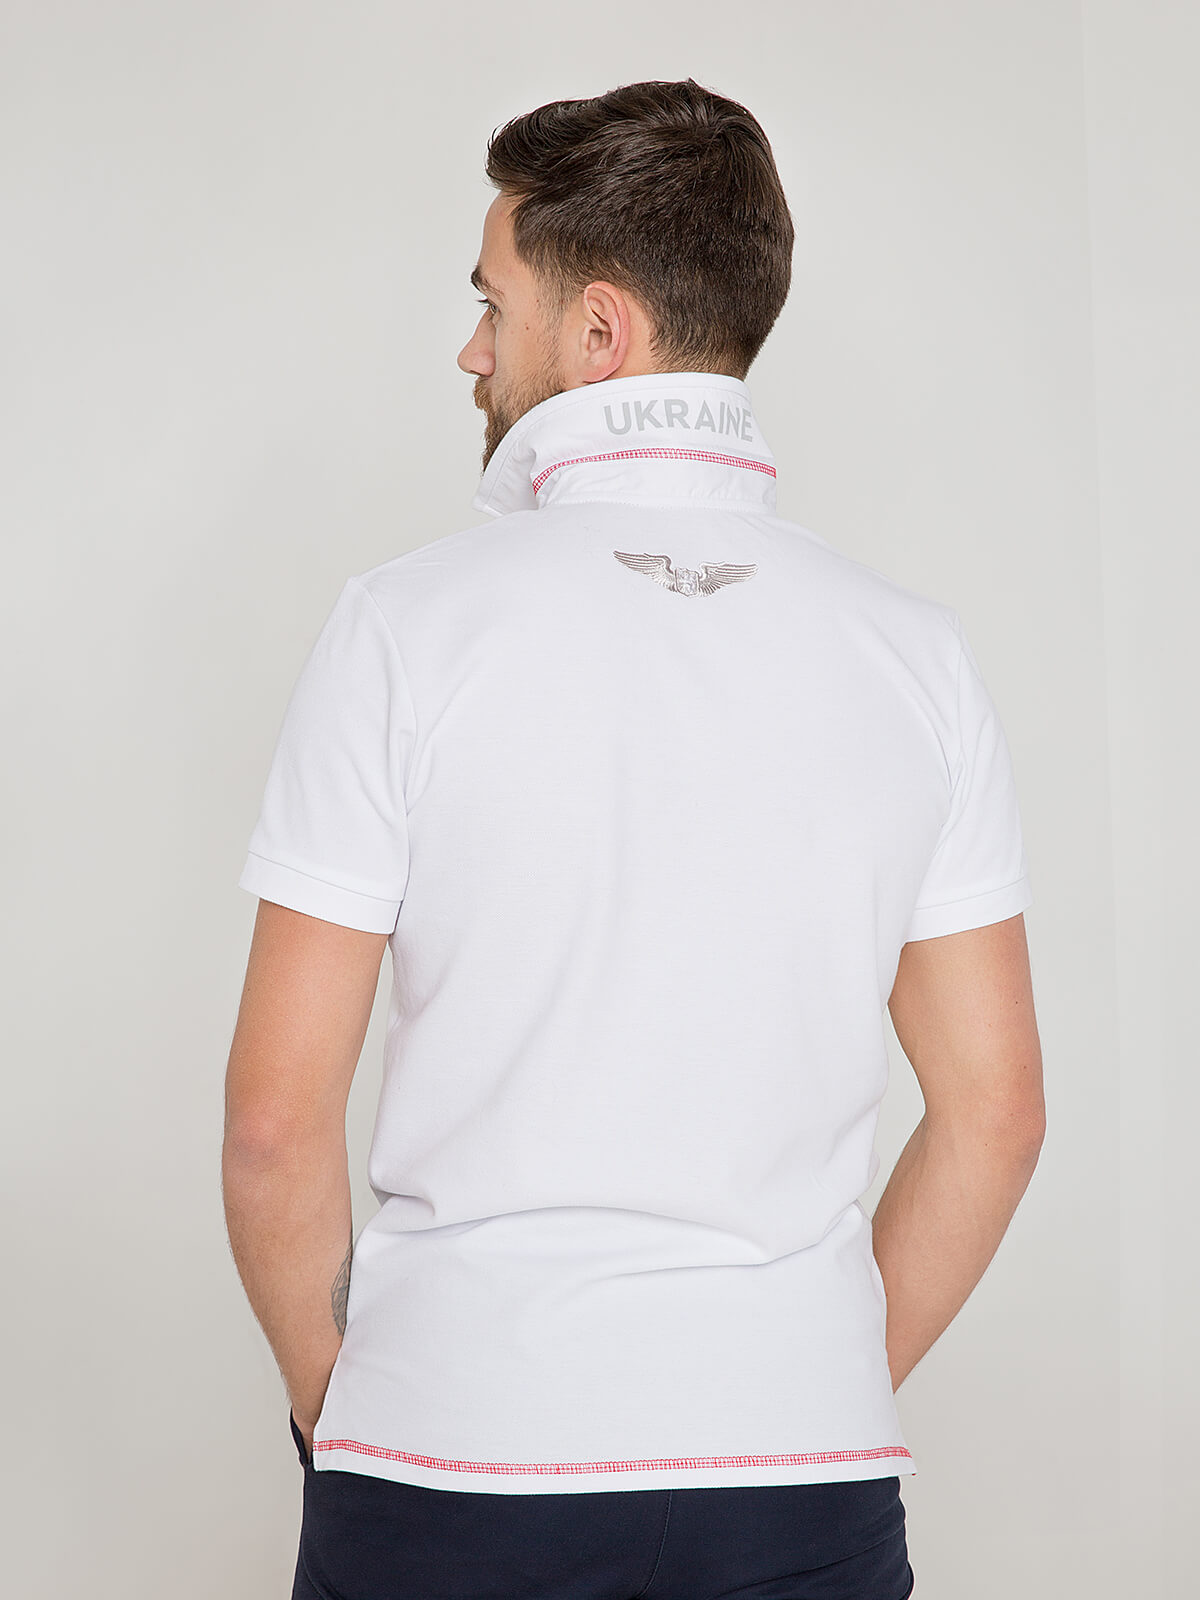 Men's Polo Shirt Wings. Color white. 
Pique fabric: 100% cotton.